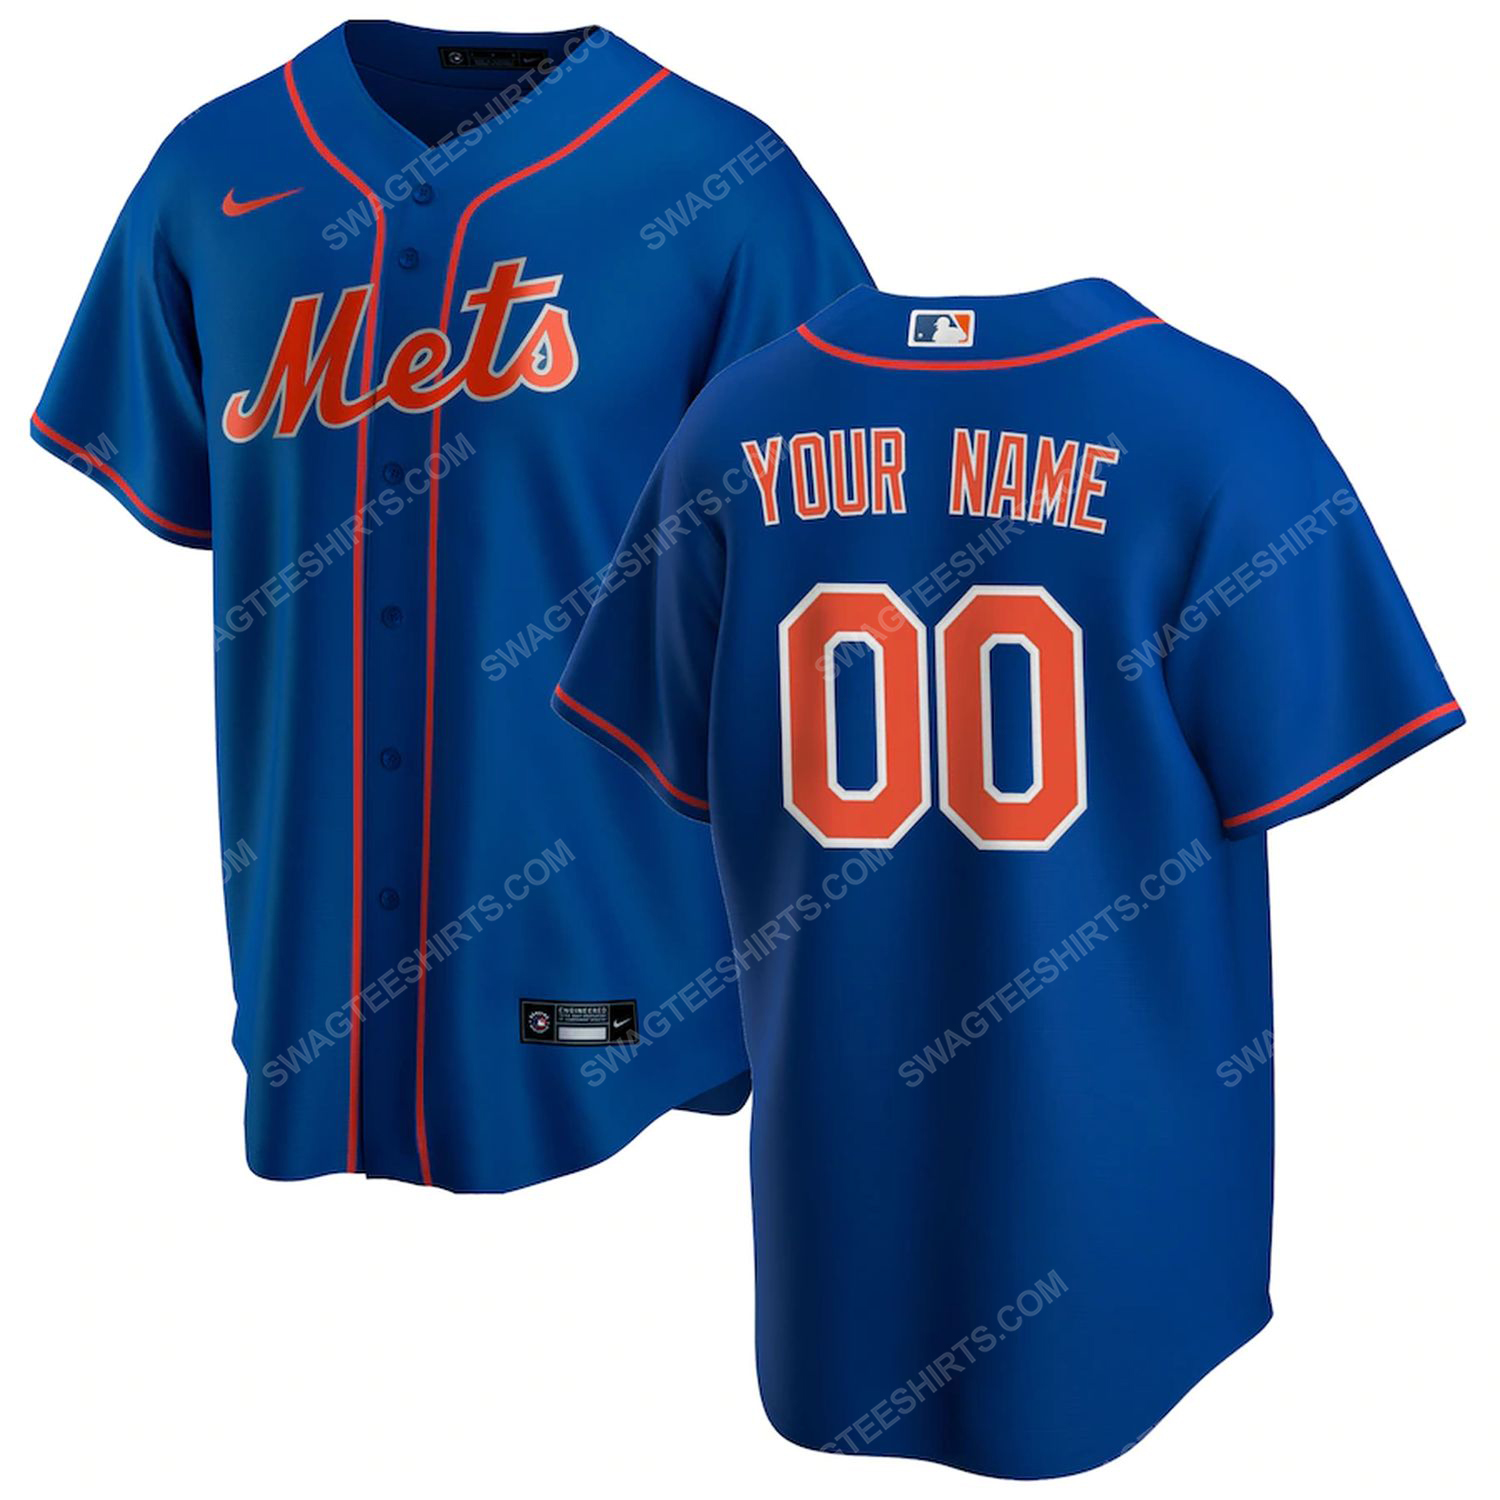 Personalized mlb new york mets baseball jersey-royal